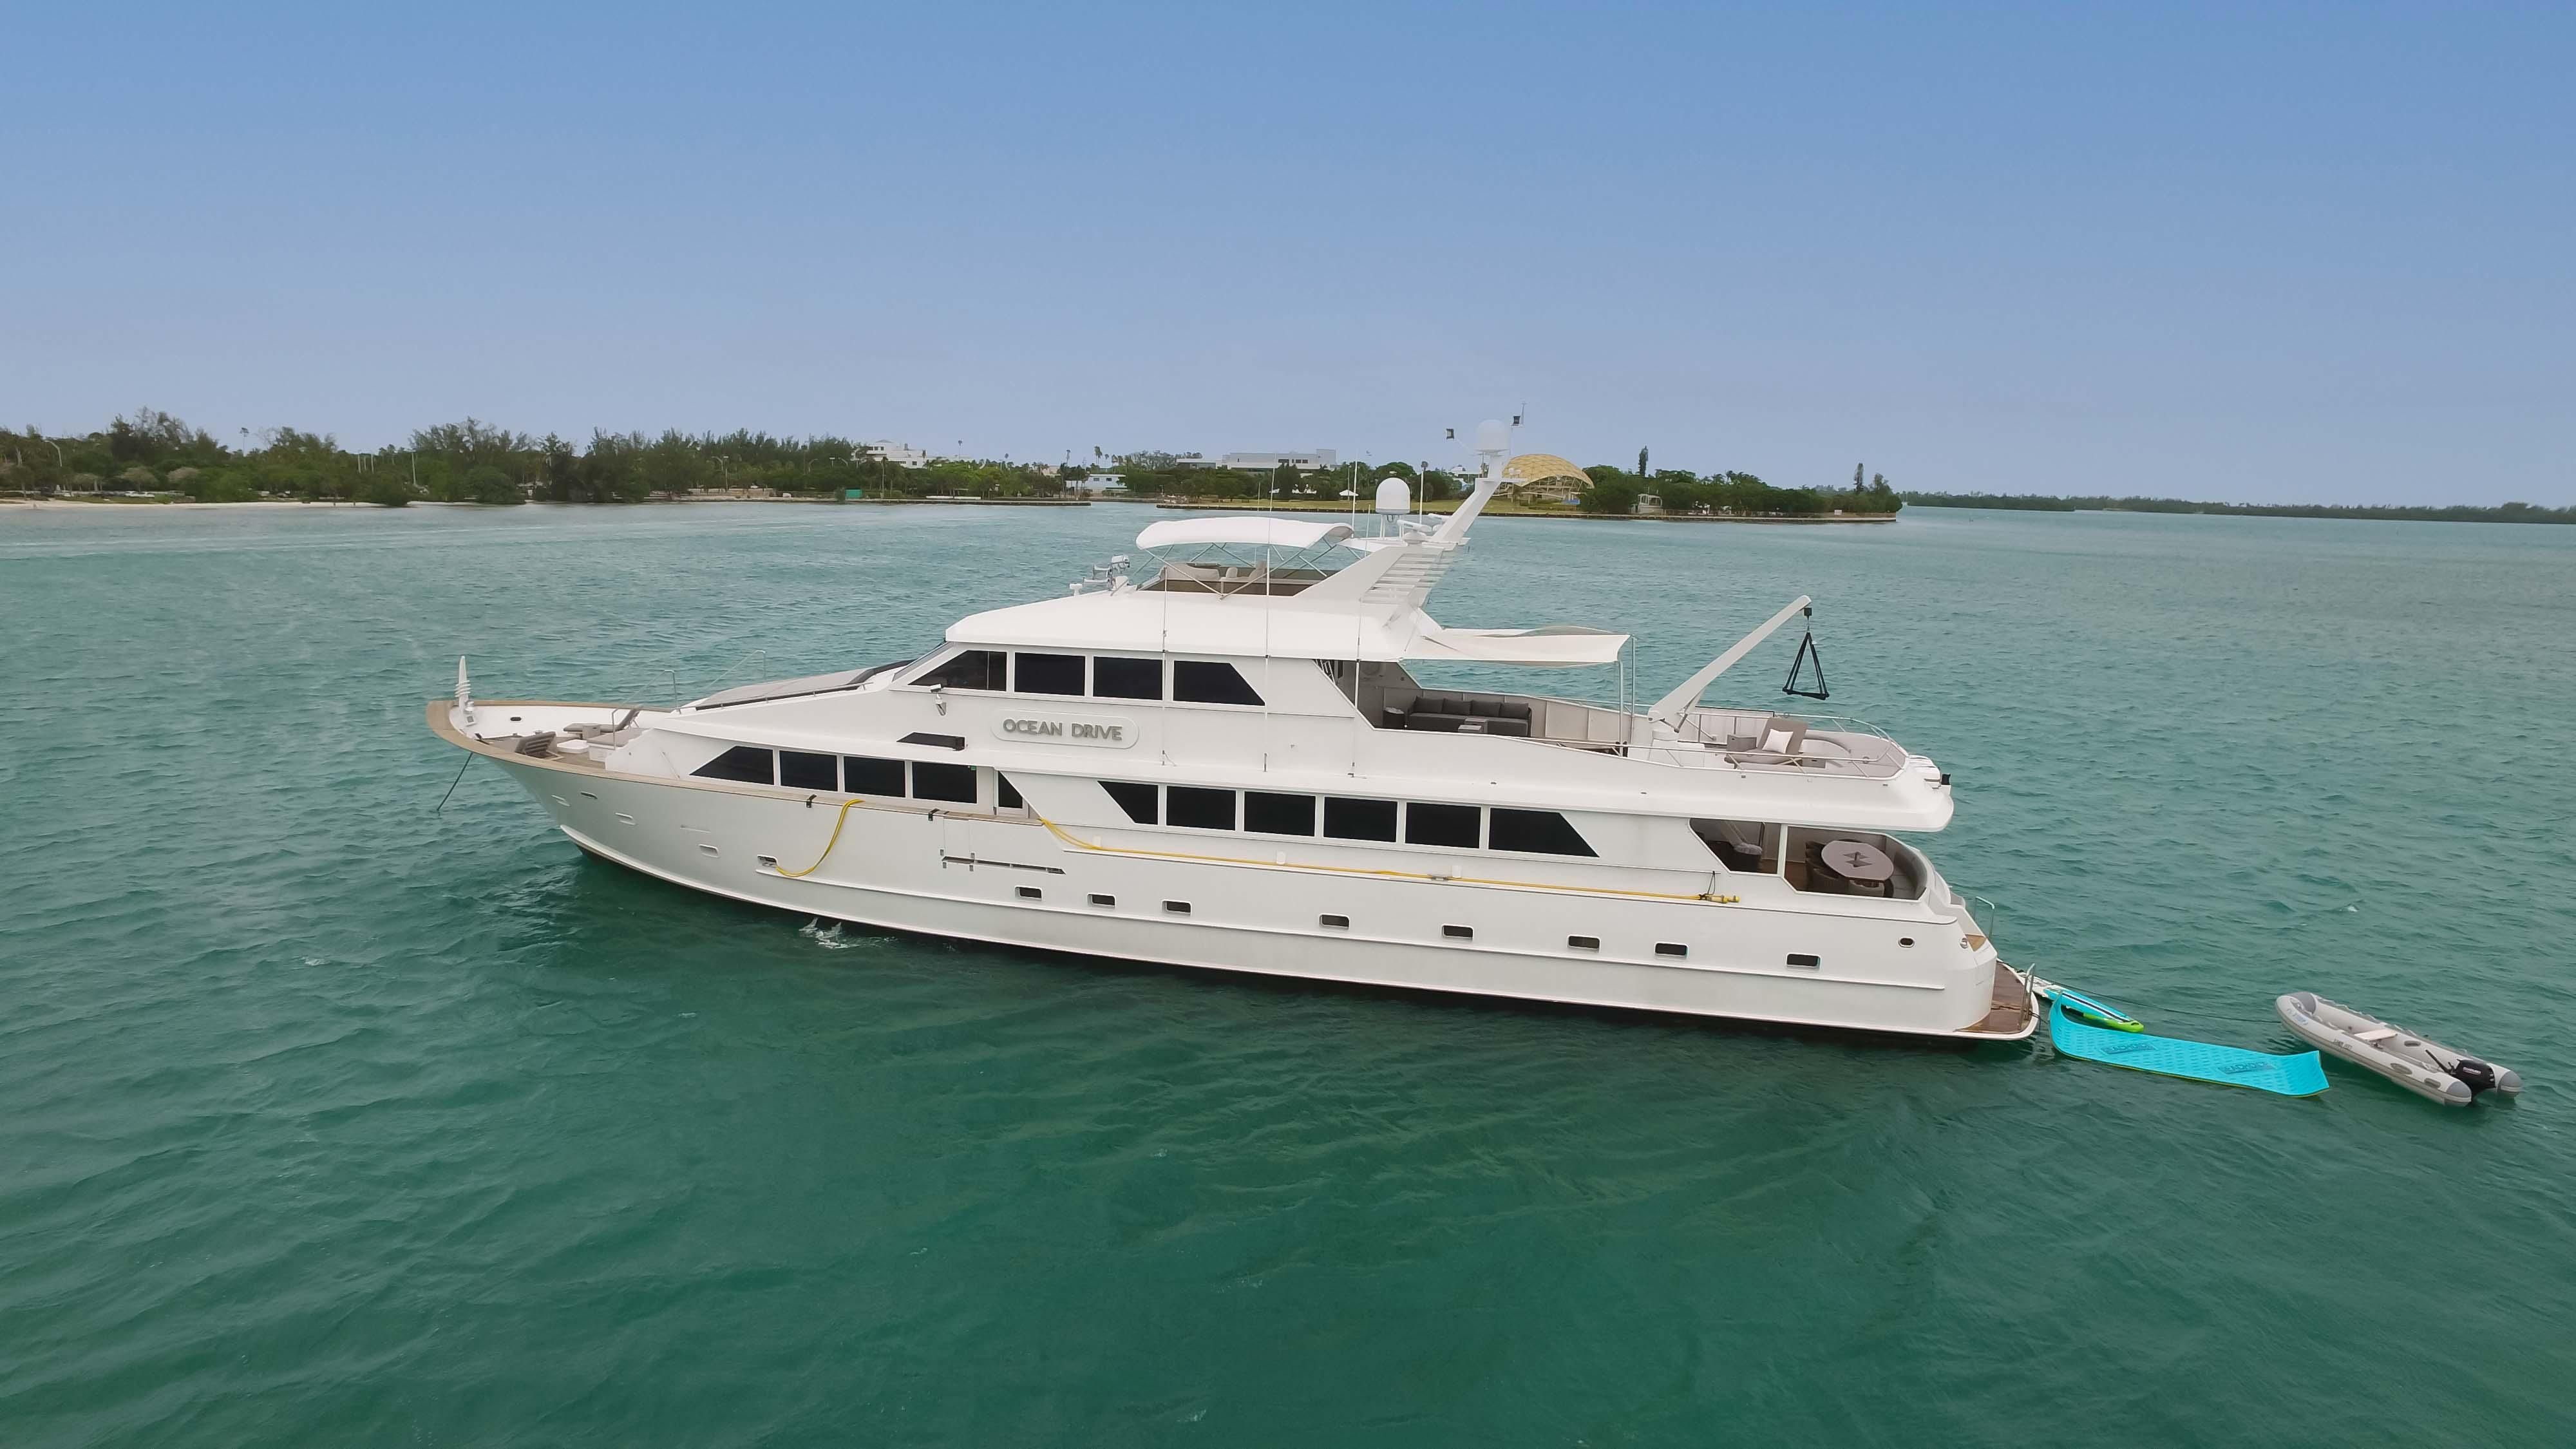 88' broward yacht for sale